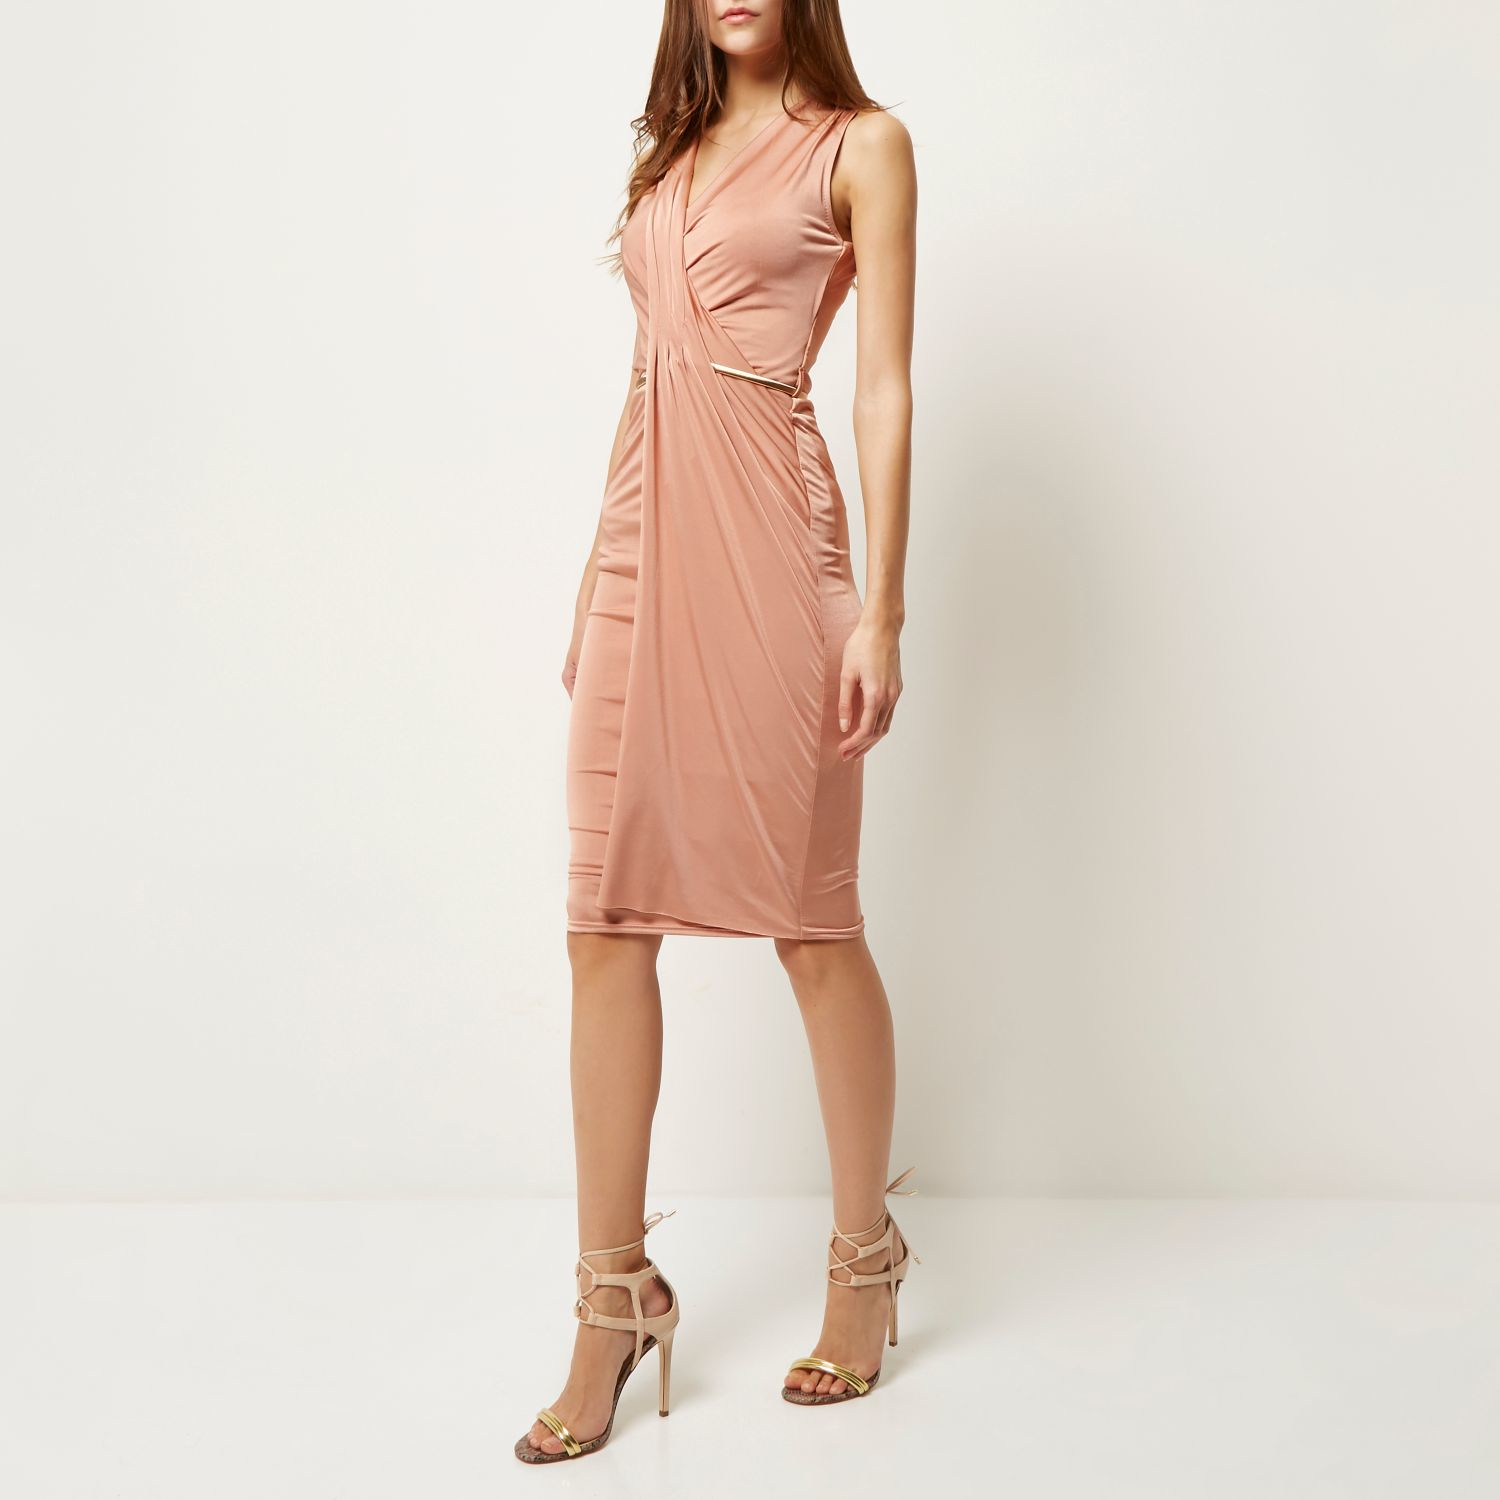 Pink River Island Dress : Clothing Brand Reviews